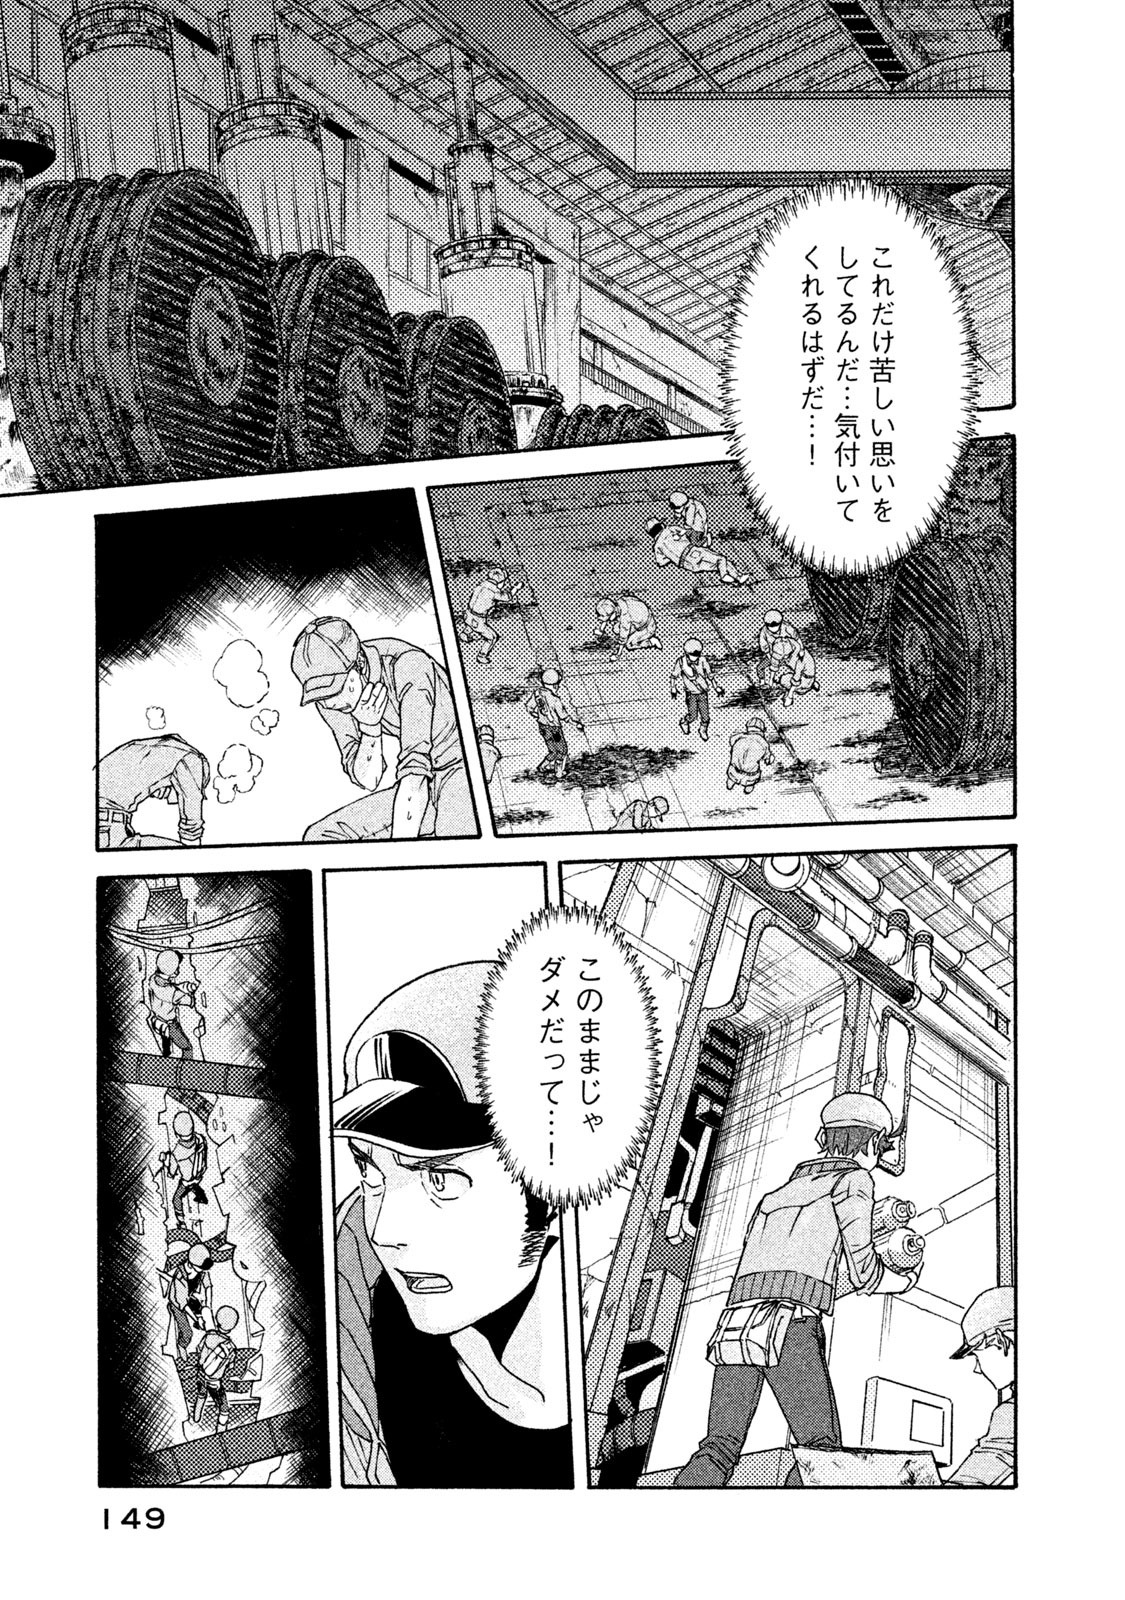 Hataraku Saibou BLACK - Chapter 17 - Page 13